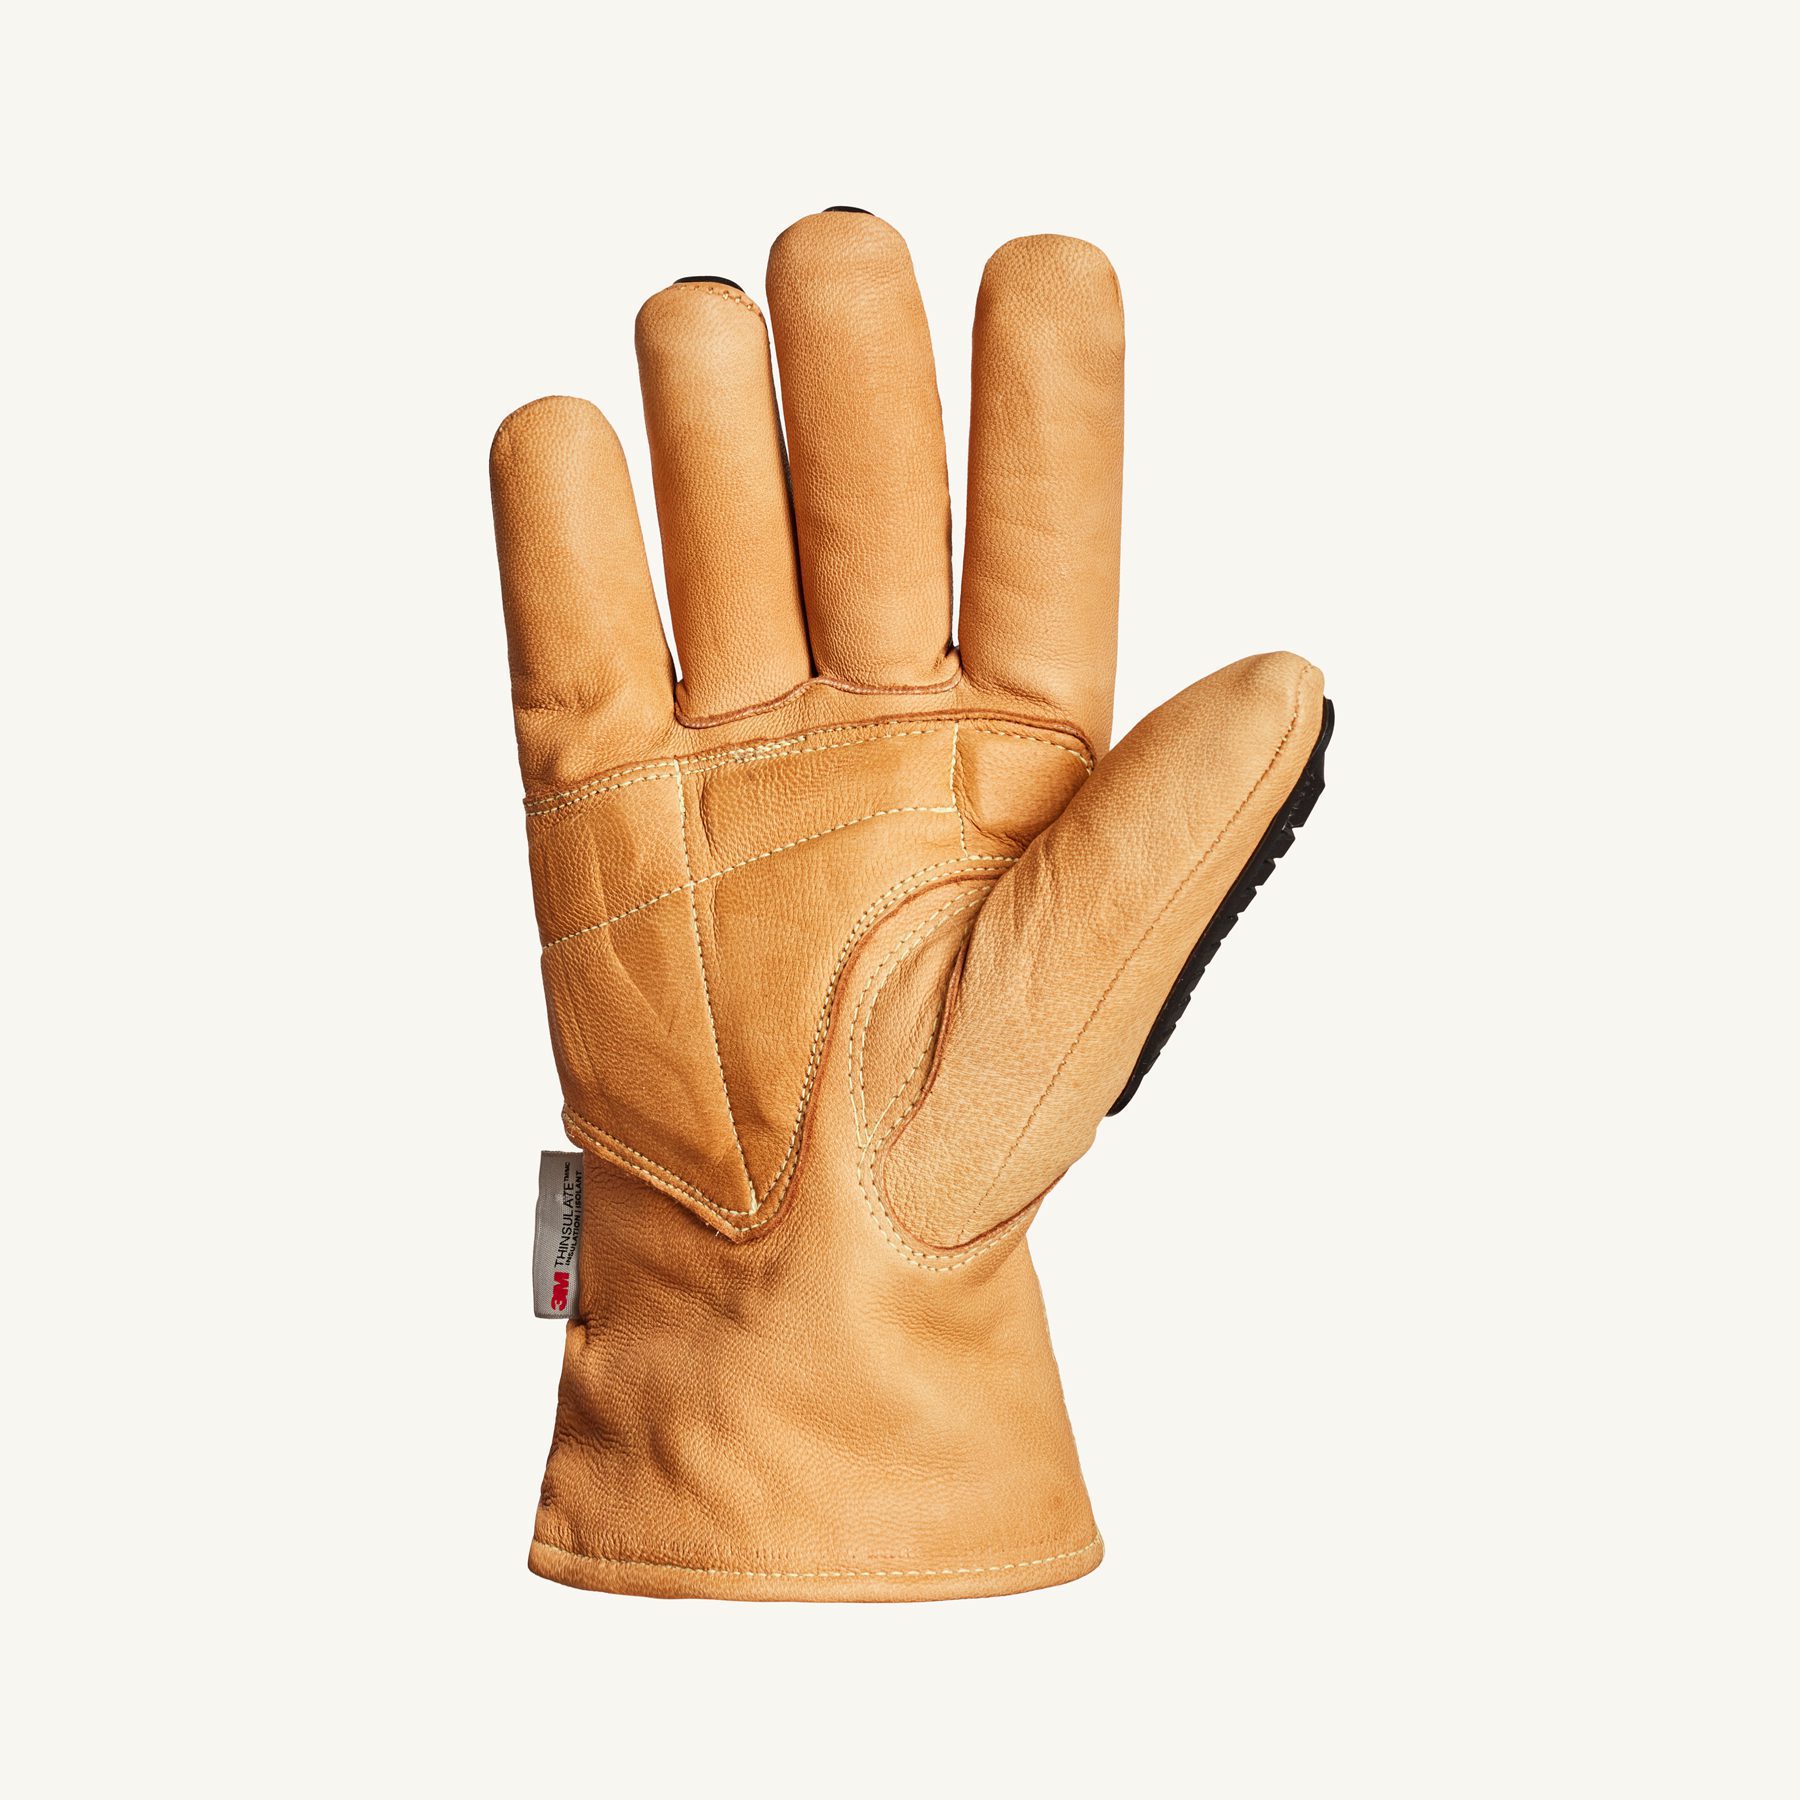 Superior Glove® Endura® Kevlar® & Thinsulate-Lined Anti-Impact Goatskin Driver Cut Gloves